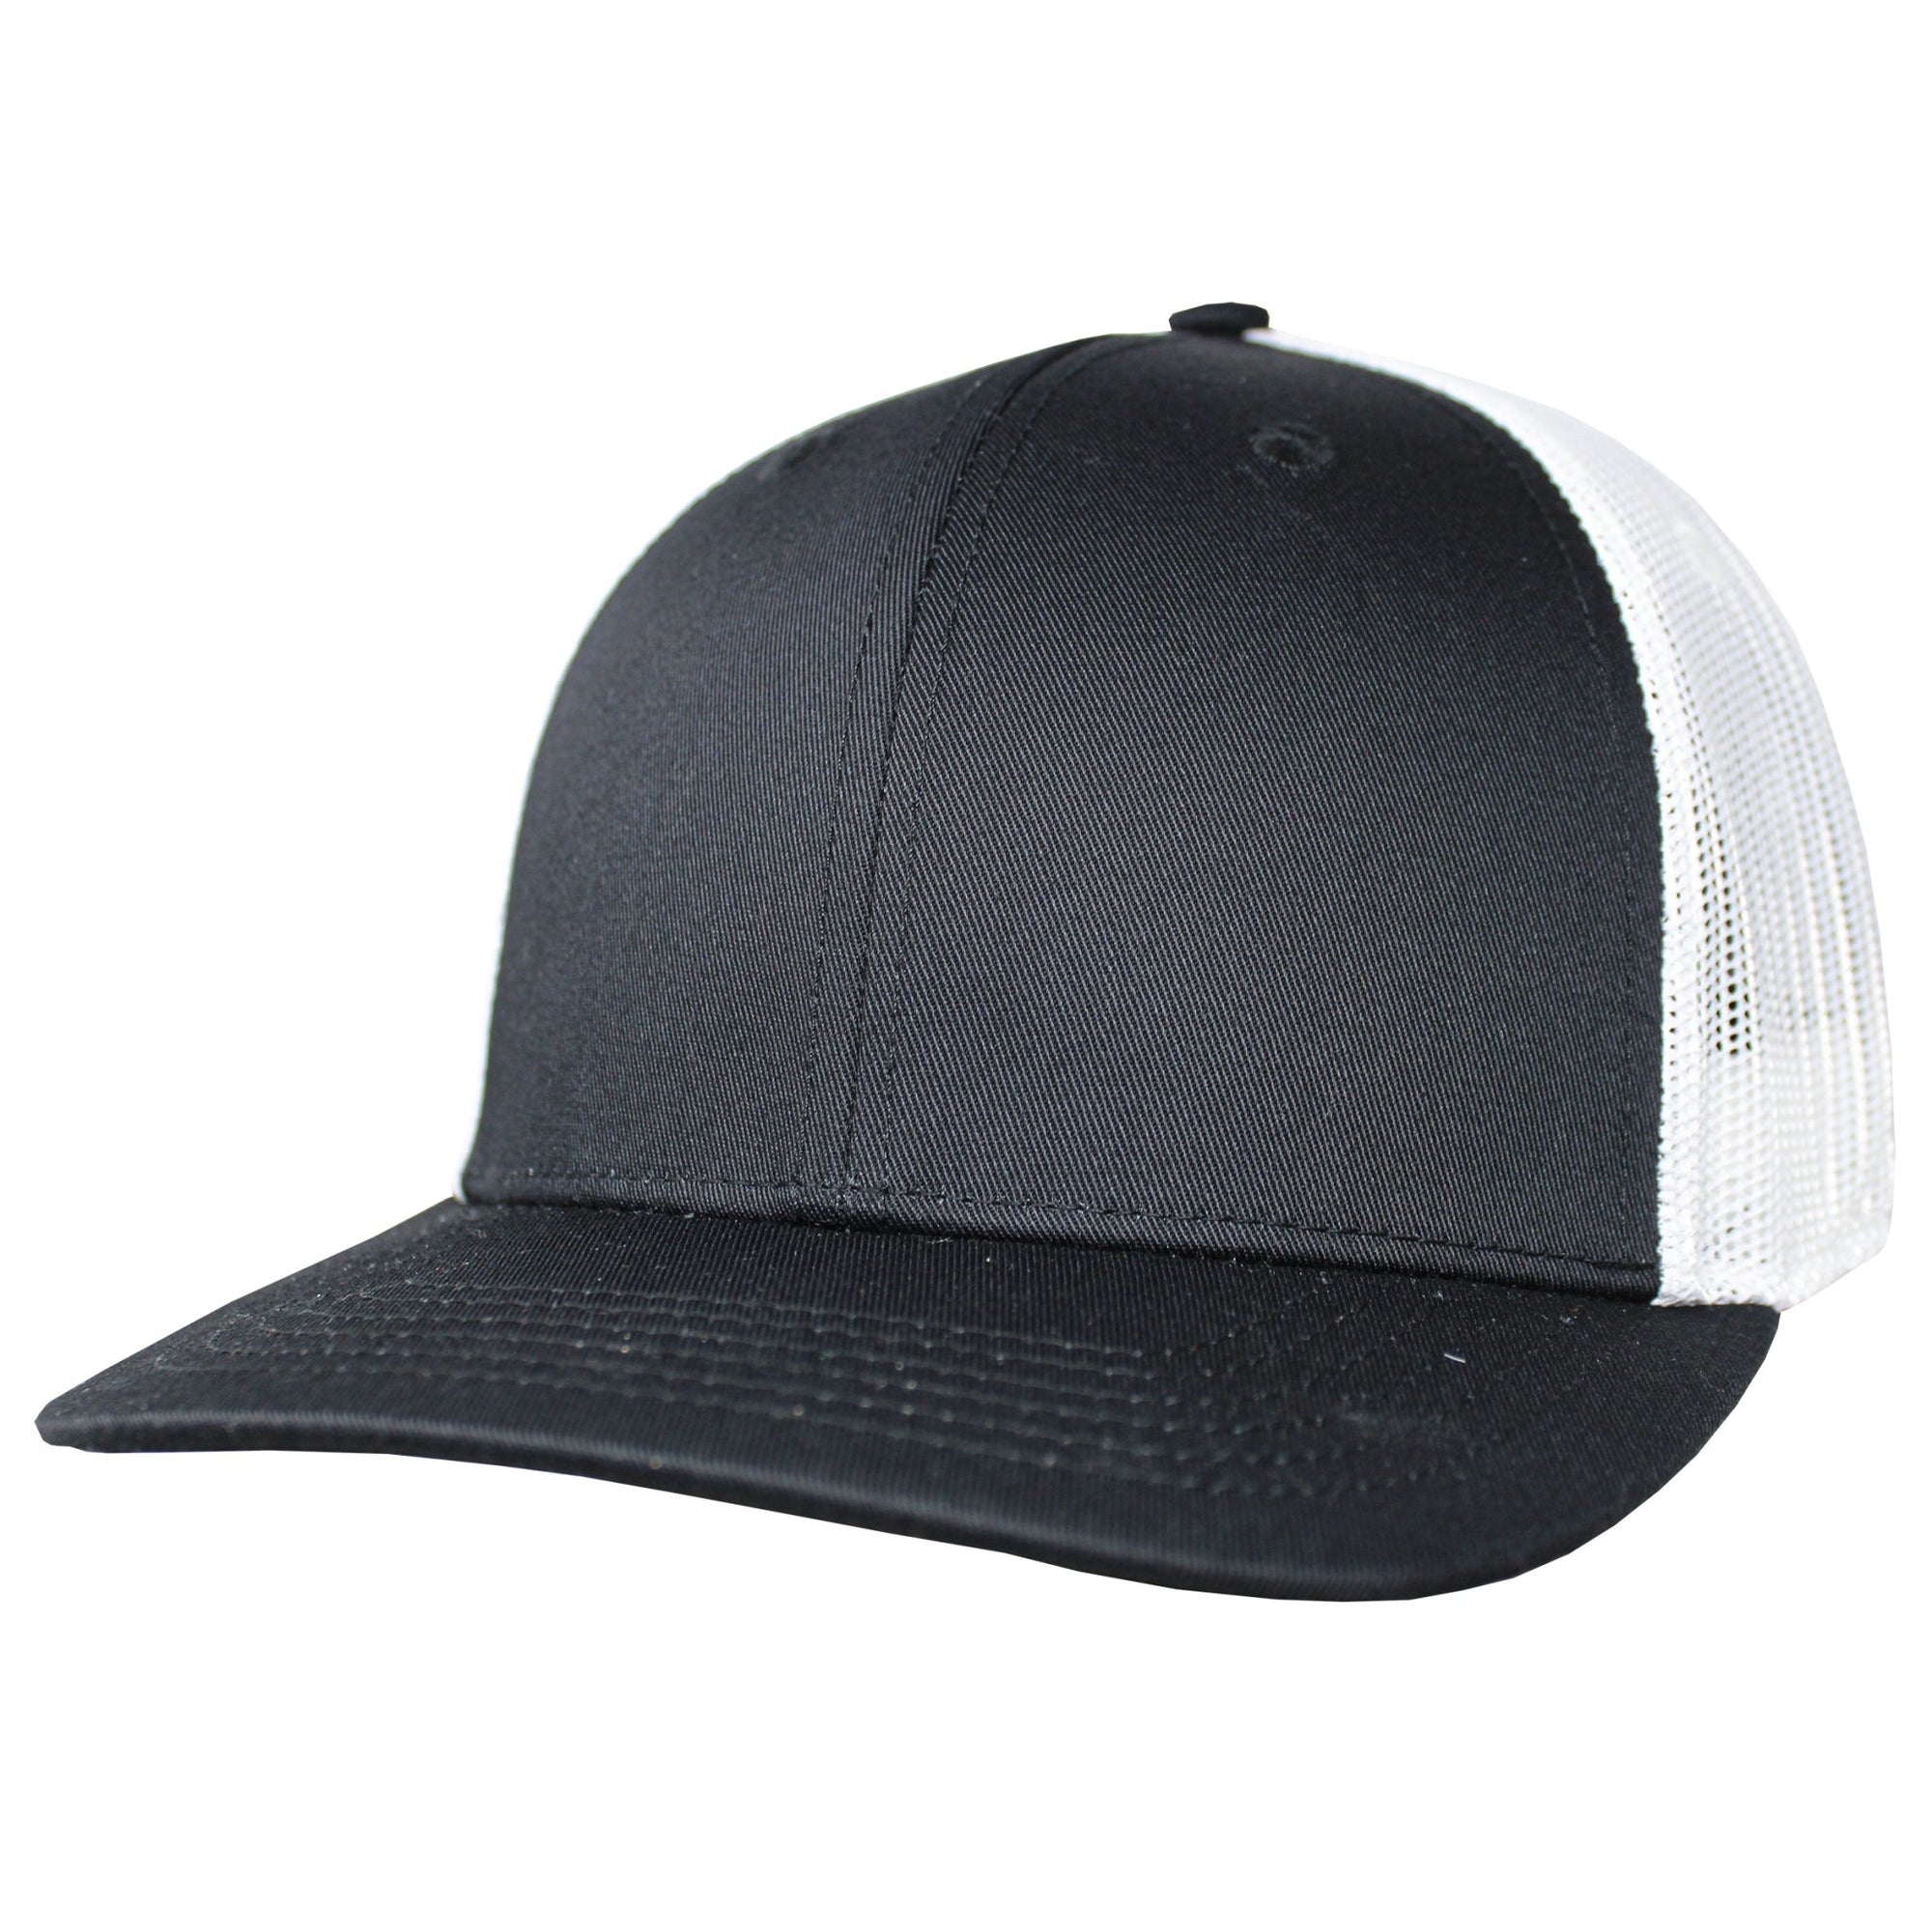 Blank Headwear - BC23 / 6 Panel Performance Trucker Cap - Black/White - Black Cat MFG - Hat